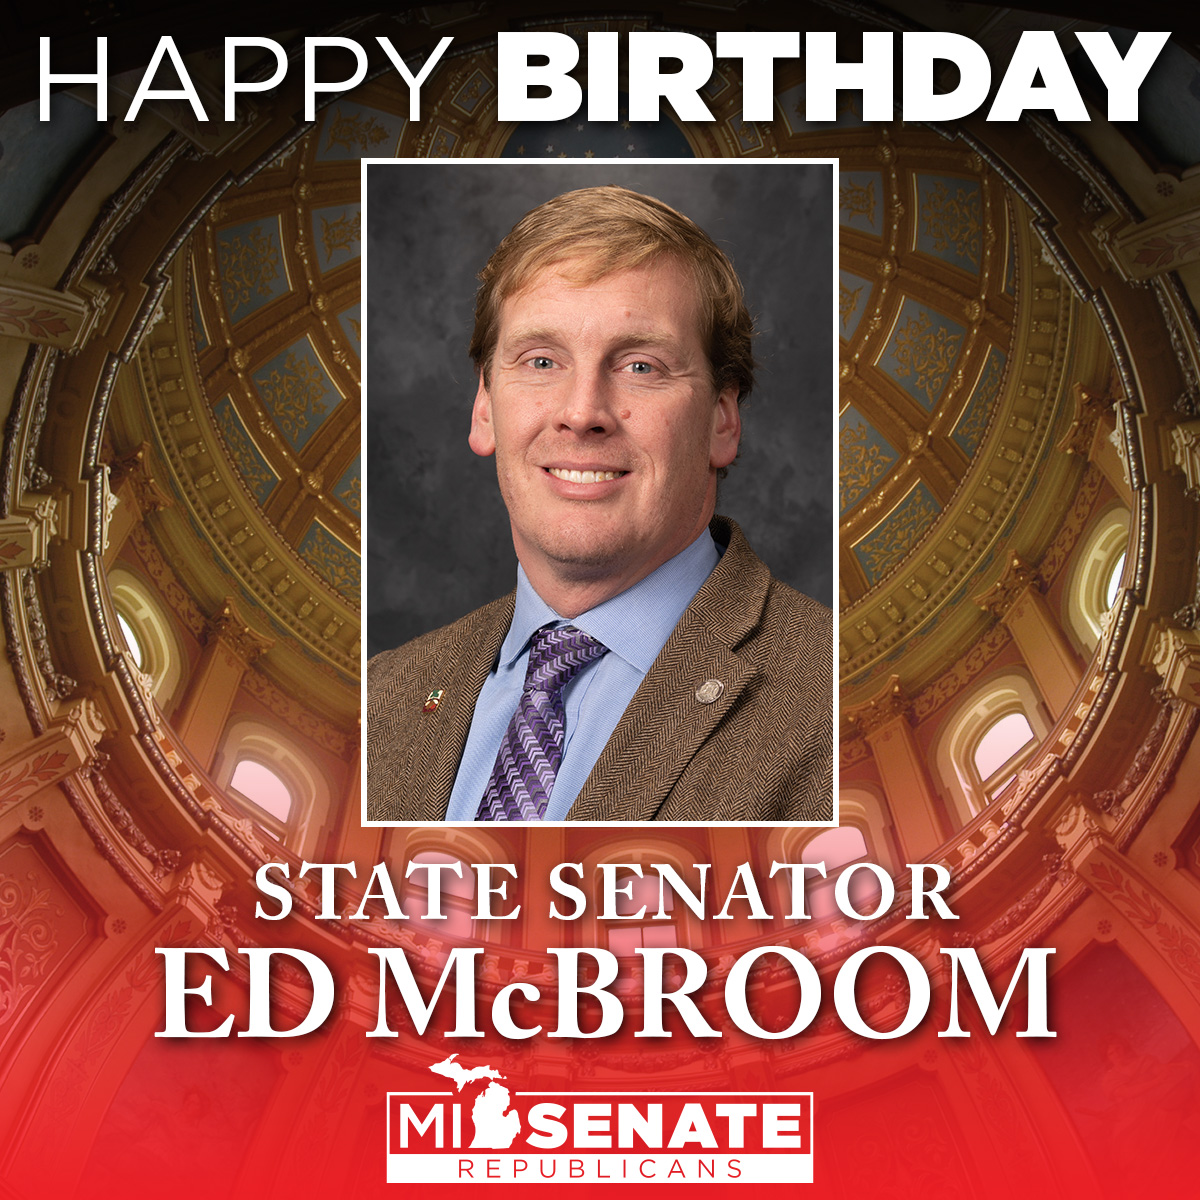 Join us today in wishing Sen. Ed McBroom a very happy birthday!